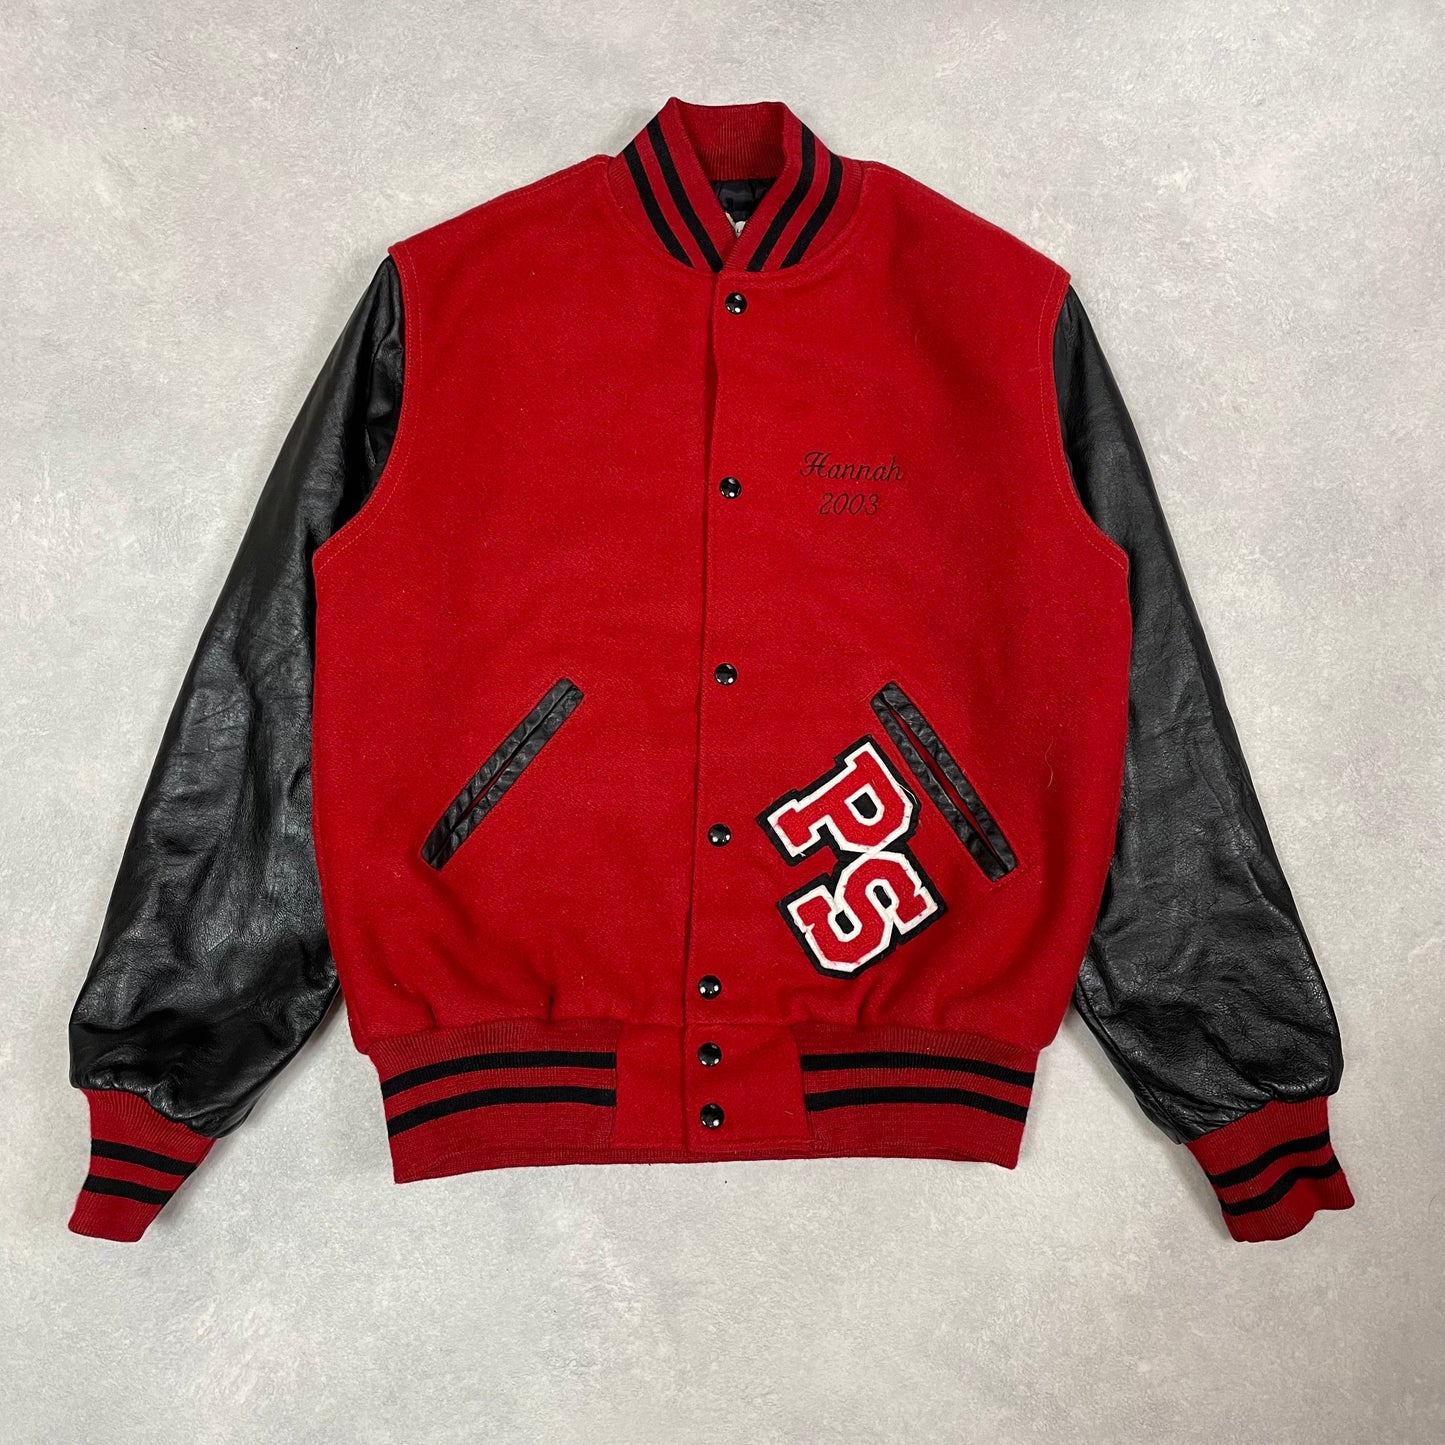 Vintage Varsity Jacket "Doty Shawnee SS Track Soccer" Made in USA 00’s